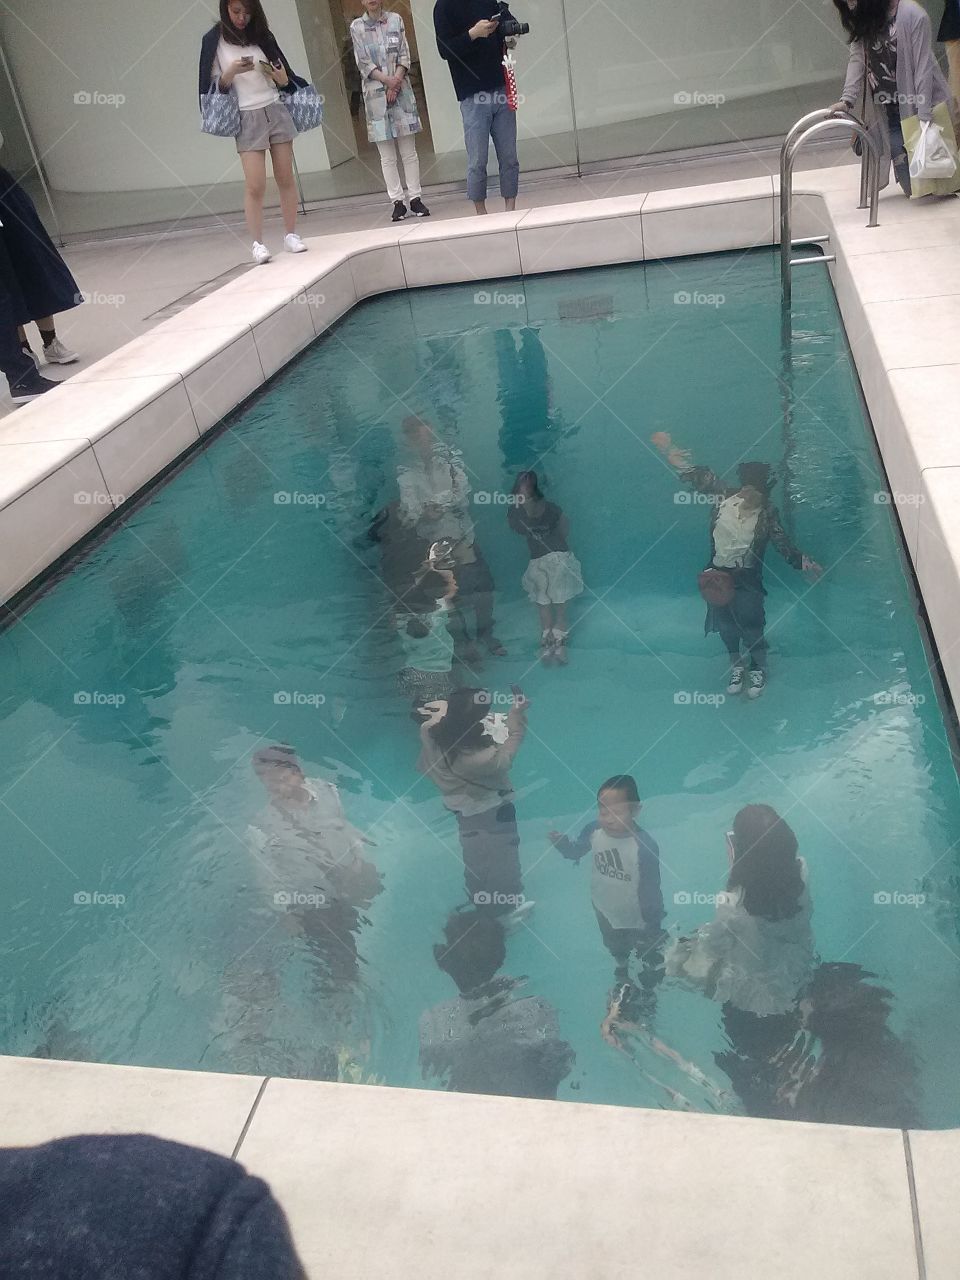 Illusion of being in a swimming pool at the Kanazawa Contemporary Art Museum - Kanazawa, Japan